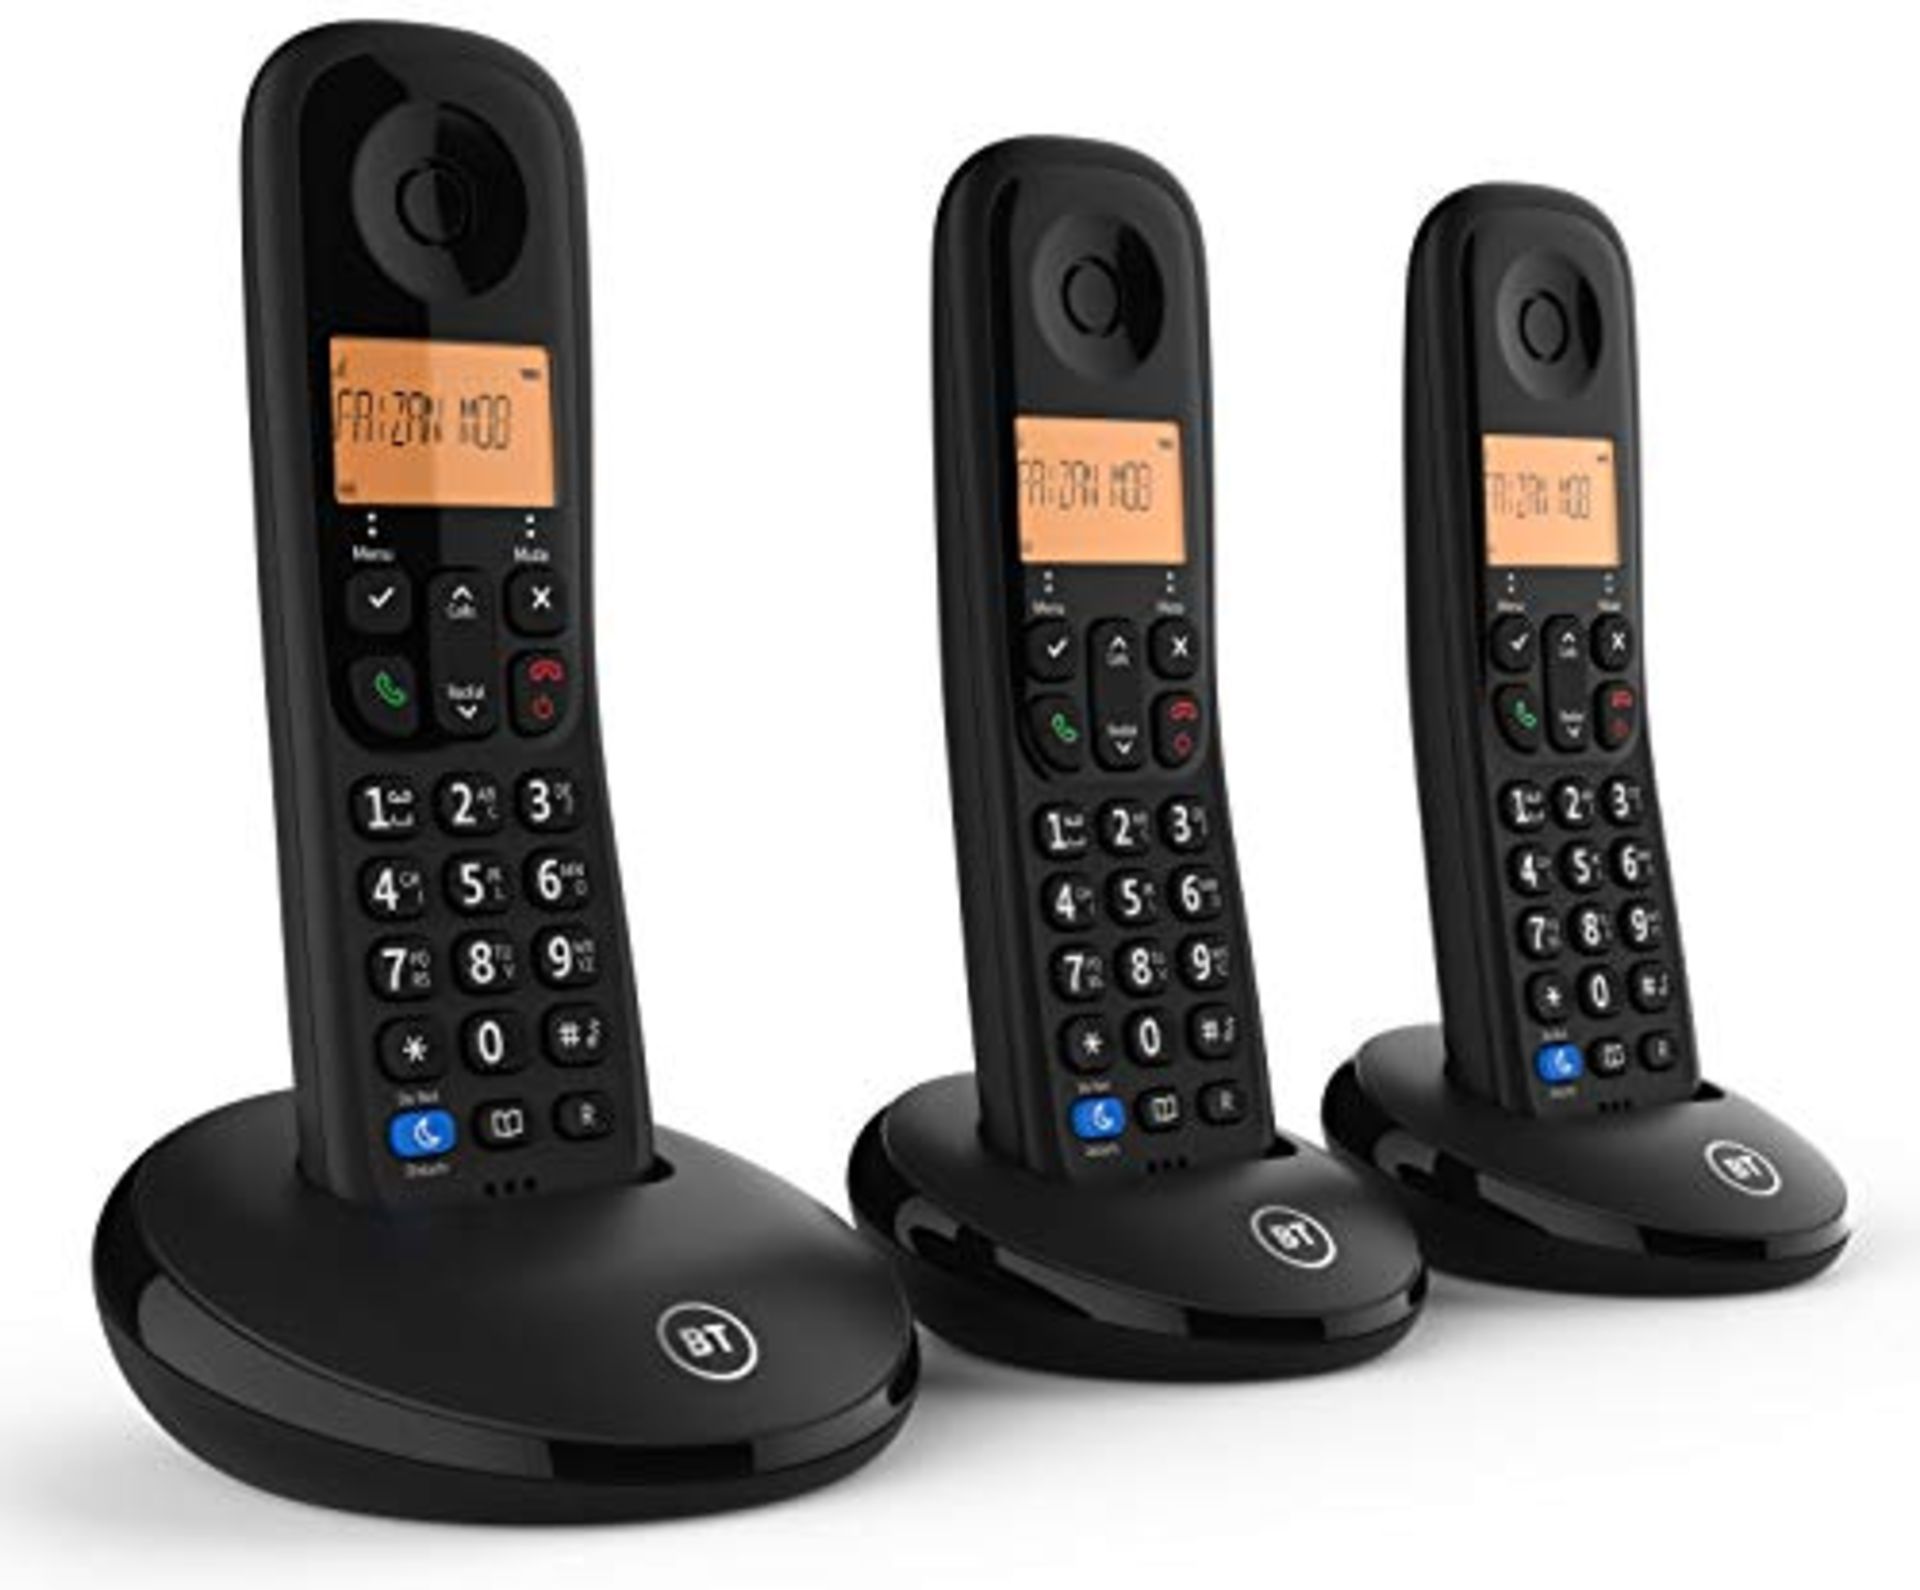 BT Everyday Cordless Landline House Phone with Basic Call Blocker, Trio Handset Pack